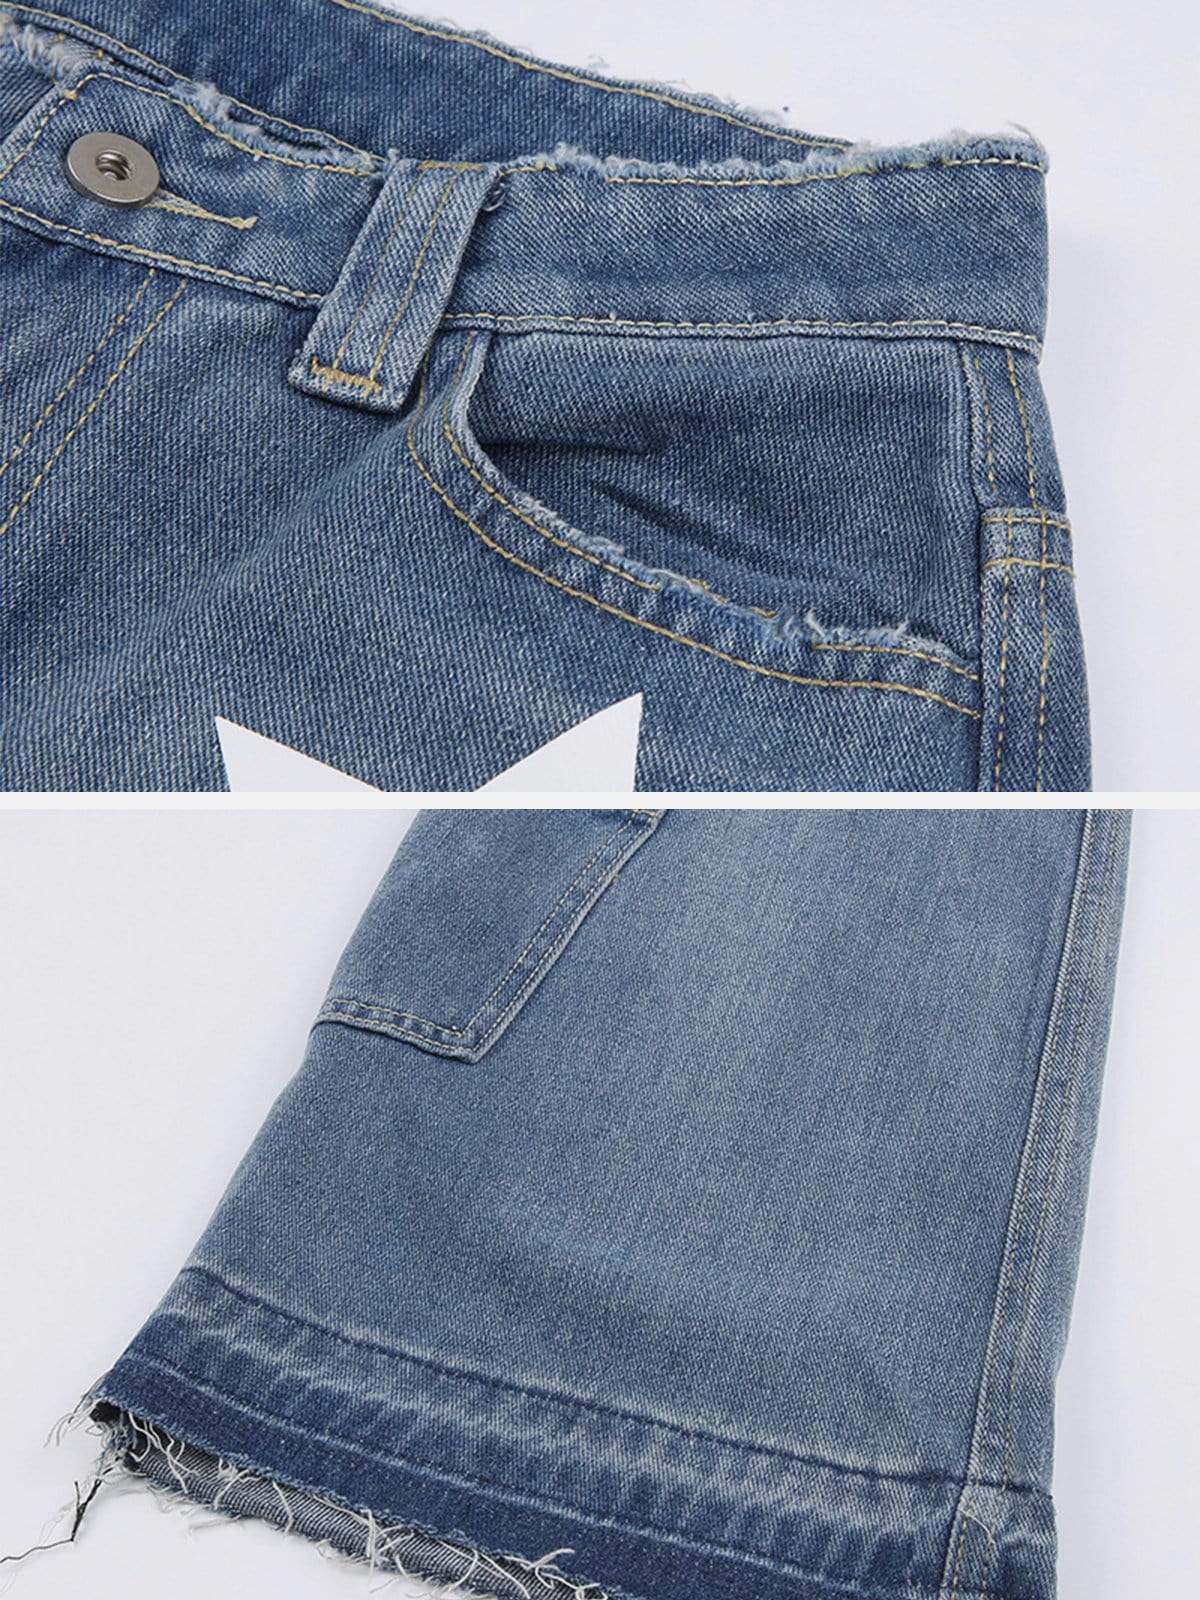 NEV Multi Pocket Star Jeans